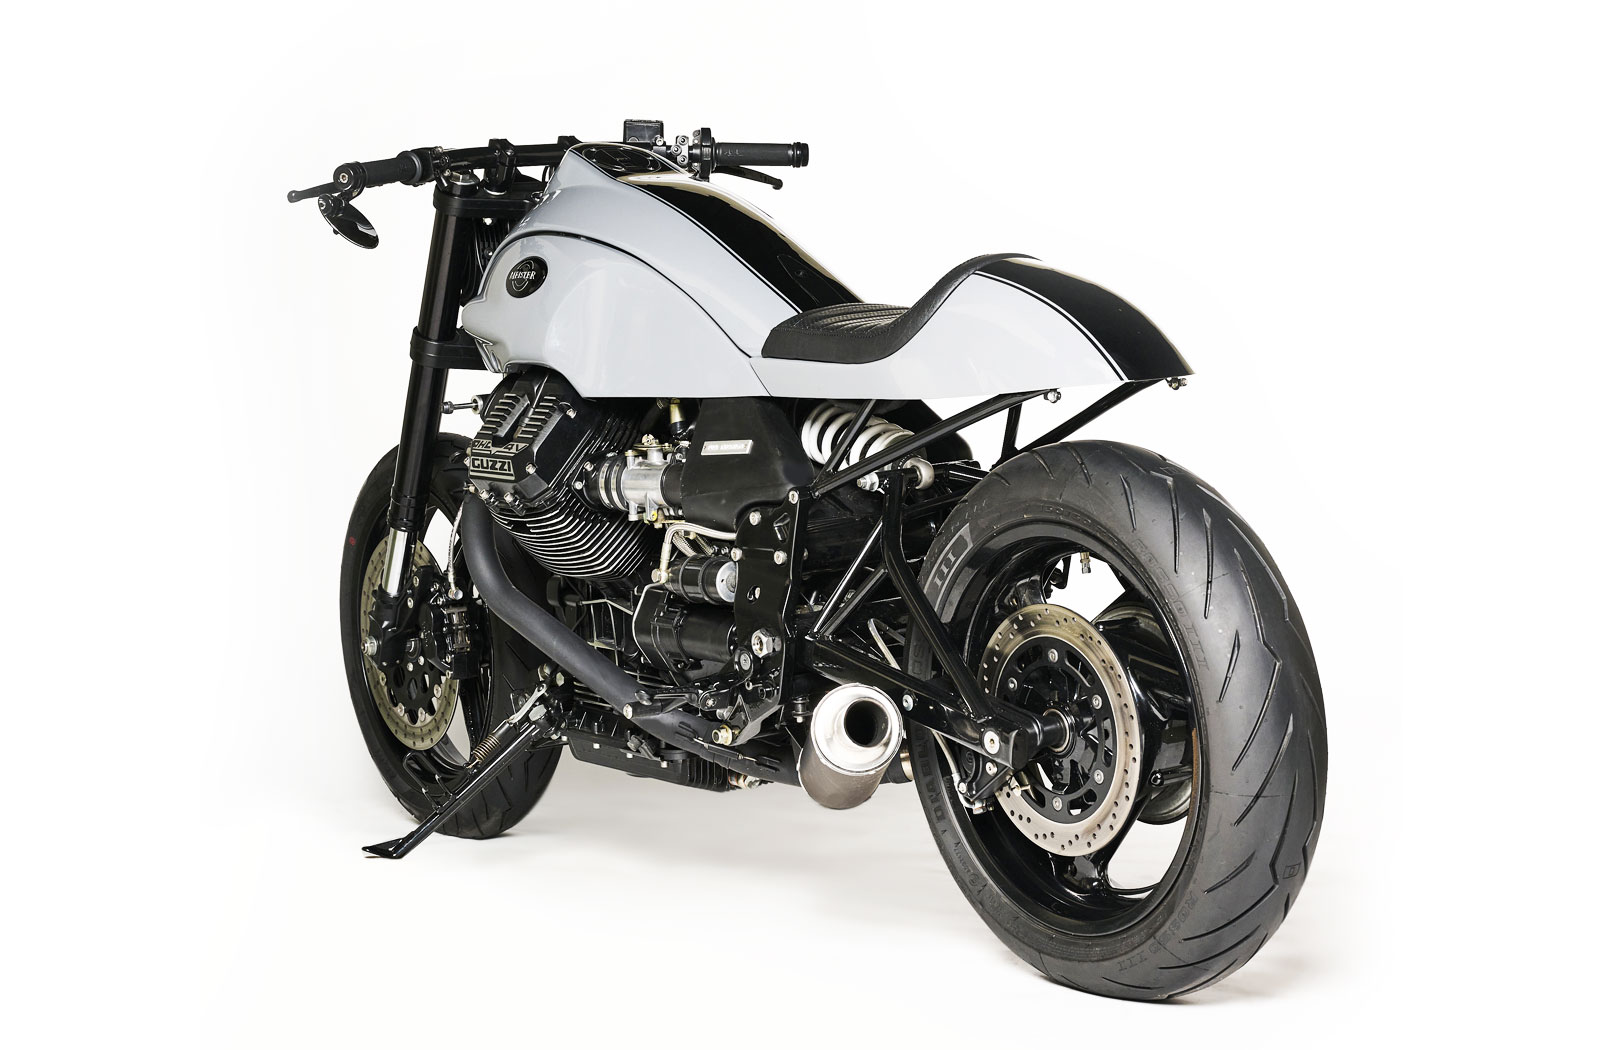 Meister Engineering Moto Guzzi V10 Centauro